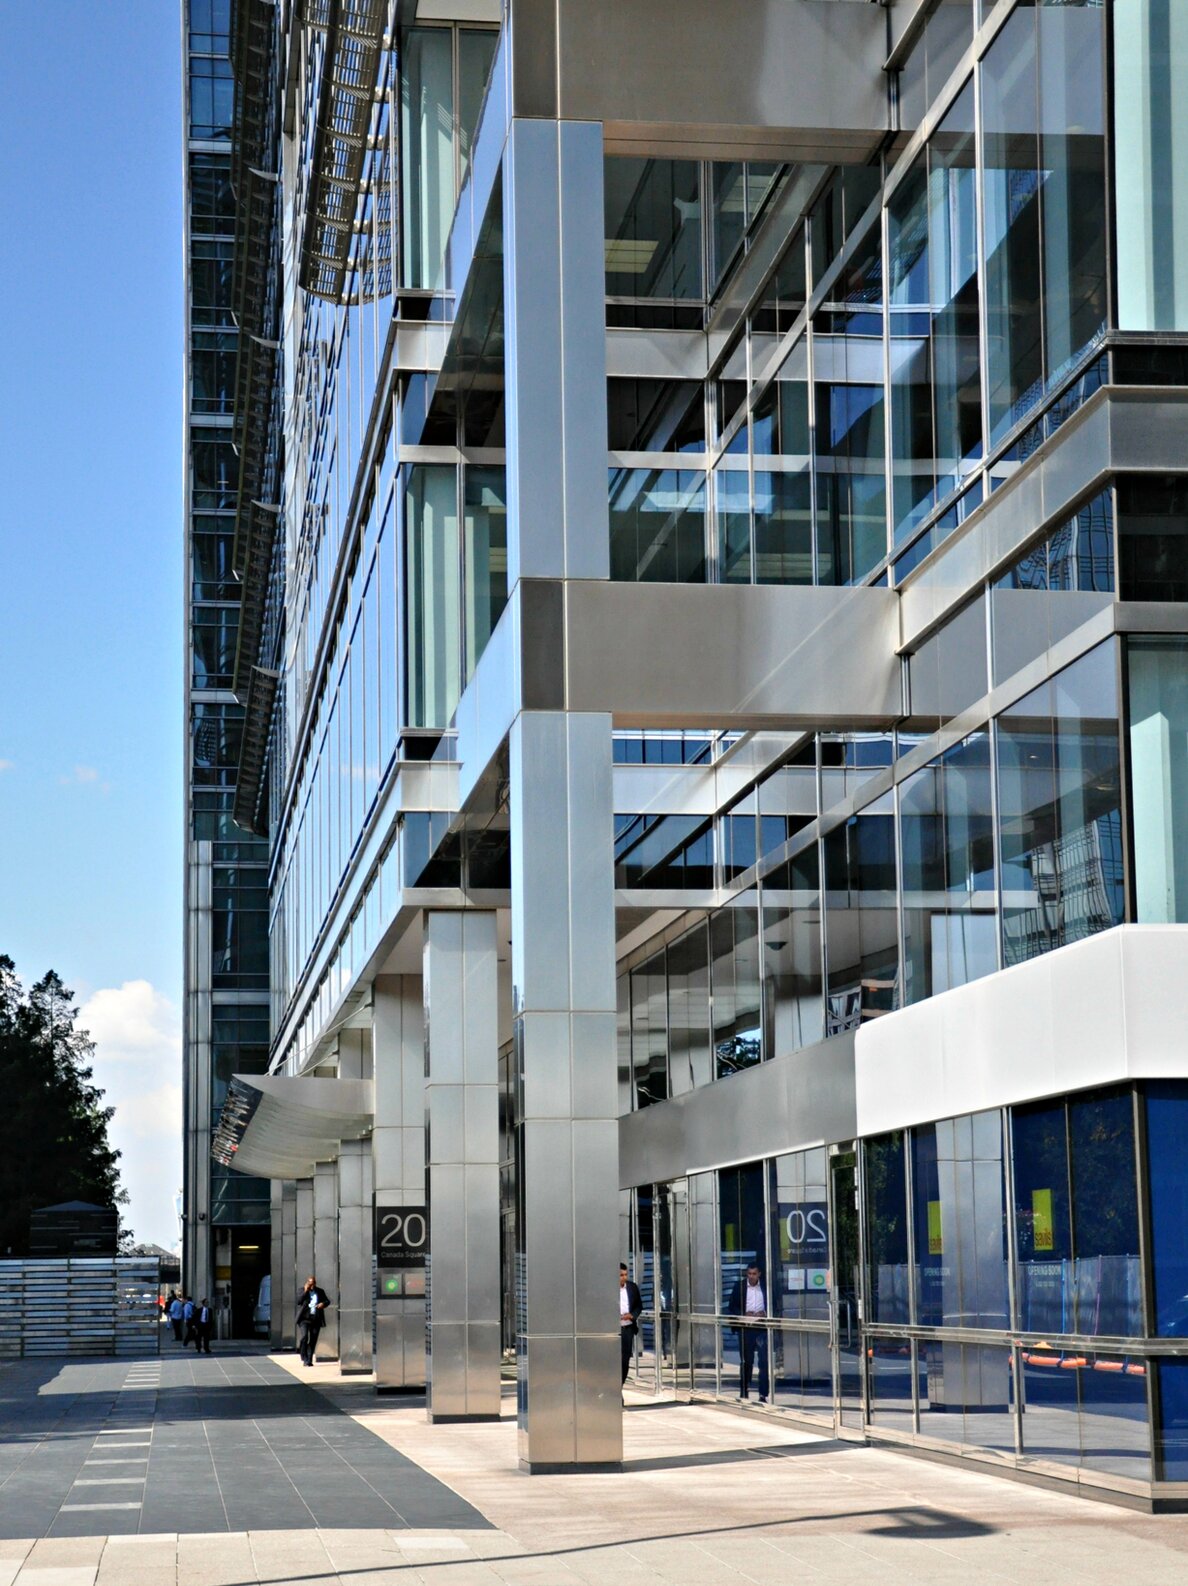 Referenzbild "20th Canada Square", London; Fassadengestalltung